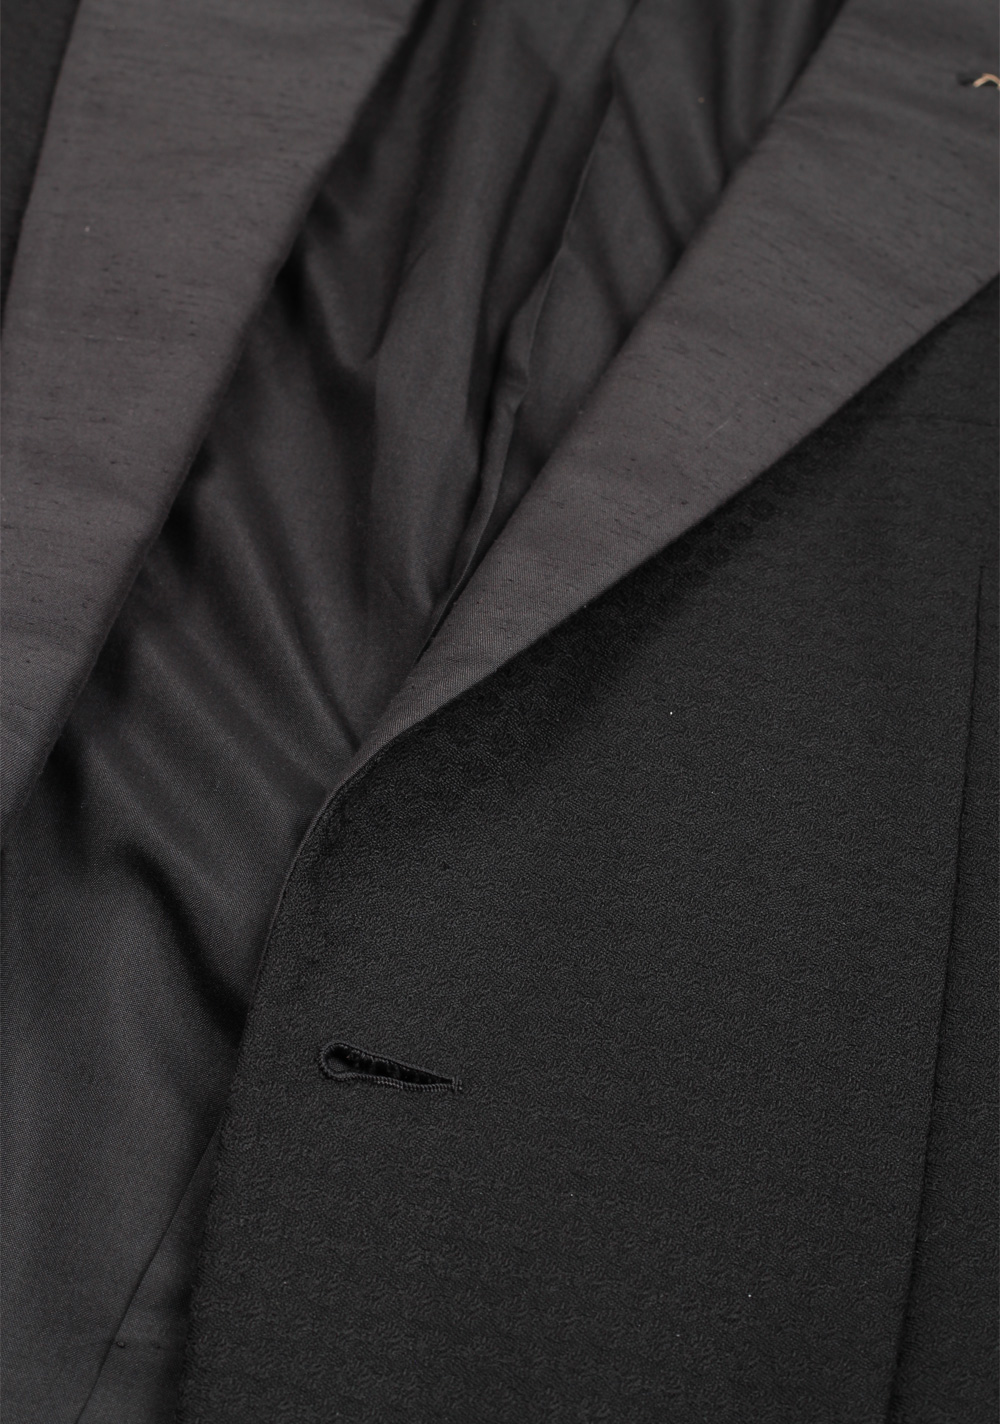 Ermenegildo Zegna Couture Black Sport Coat Size 48L / 38L U.S. | Costume Limité